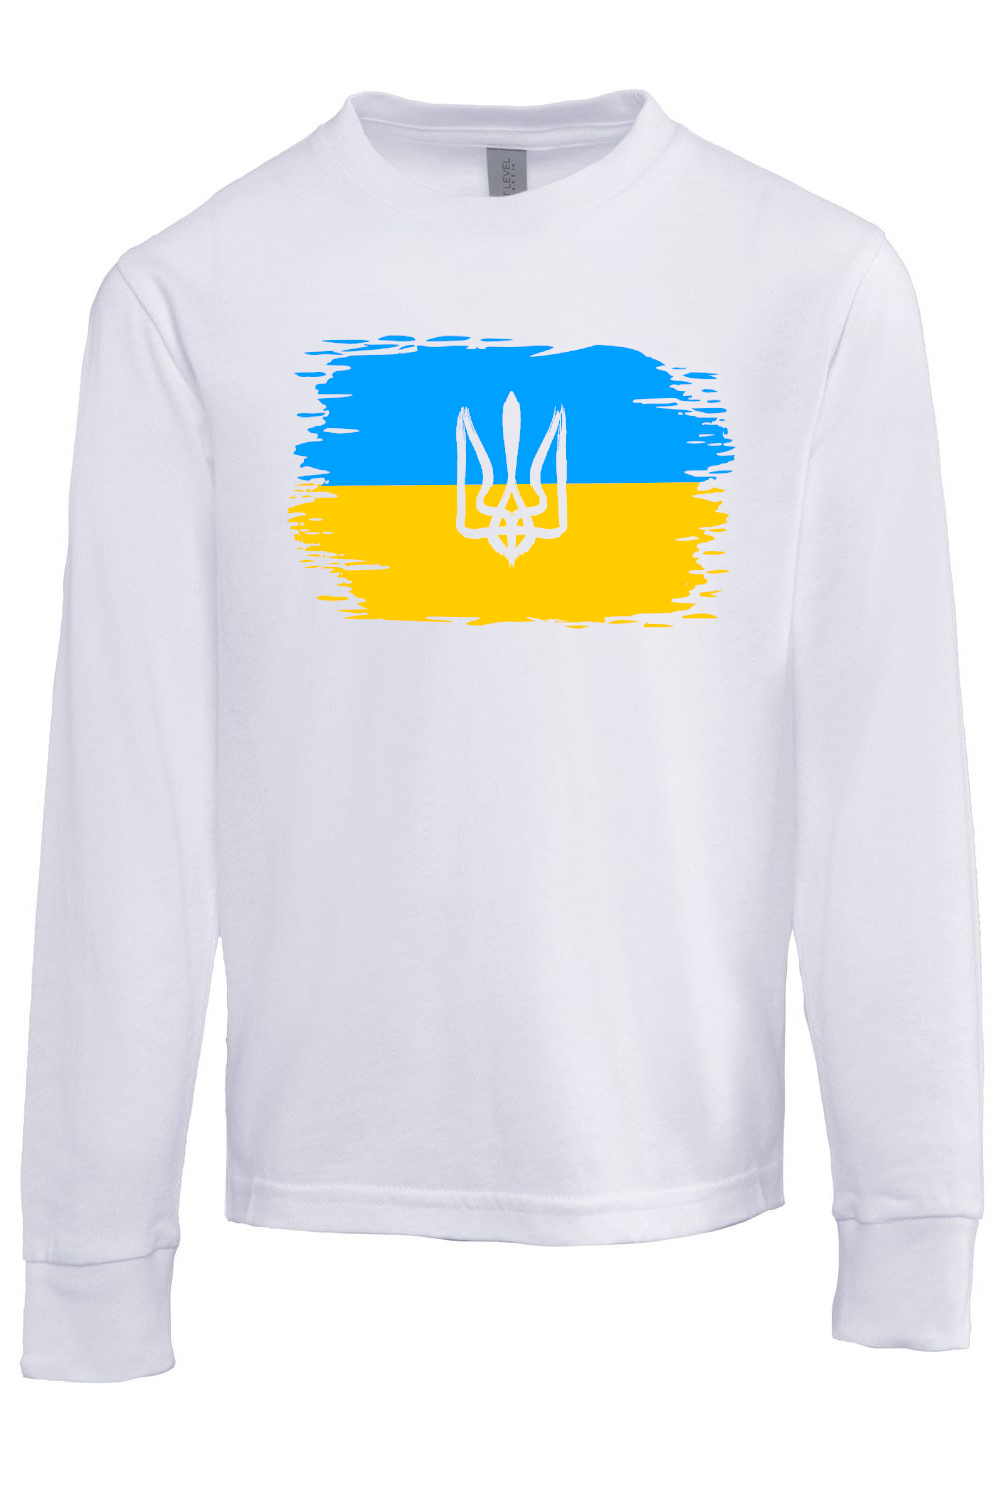 Youth long sleeve shirt "Ukrainian flag"